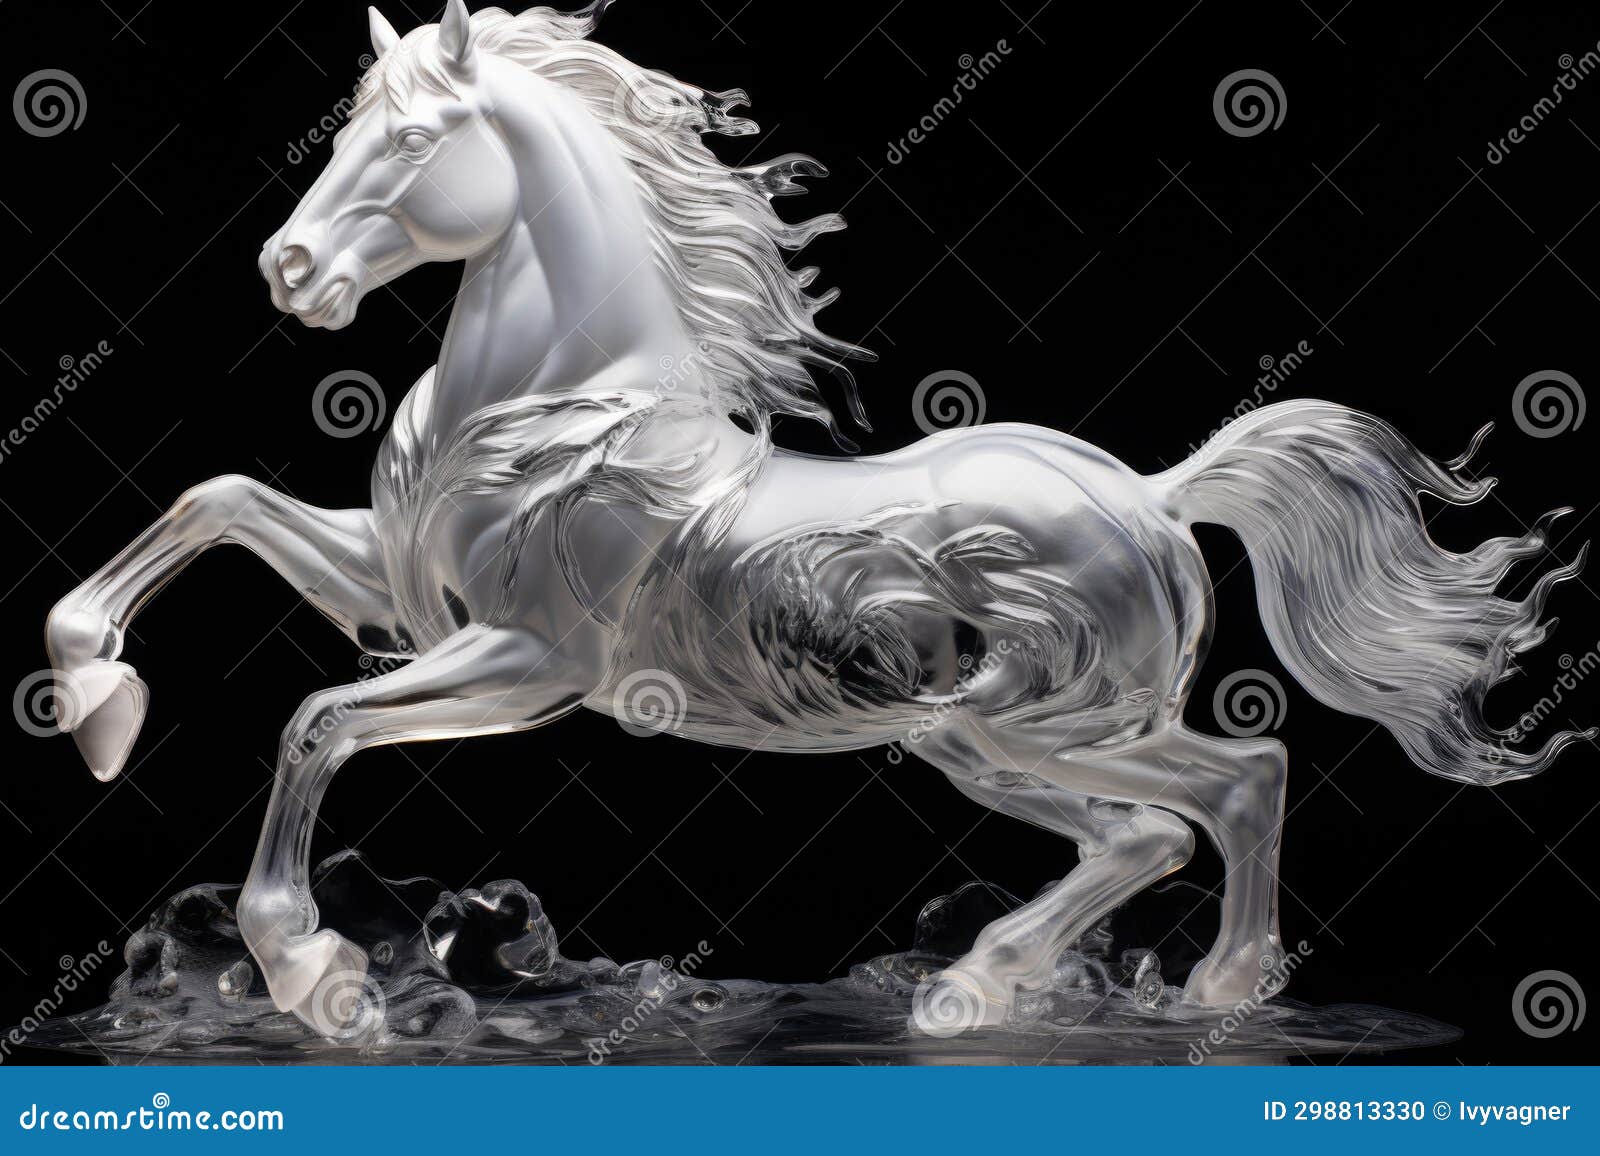 Majestic Flying Horse | Magical Beauty in Flight | AI Art Generator |  Easy-Peasy.AI